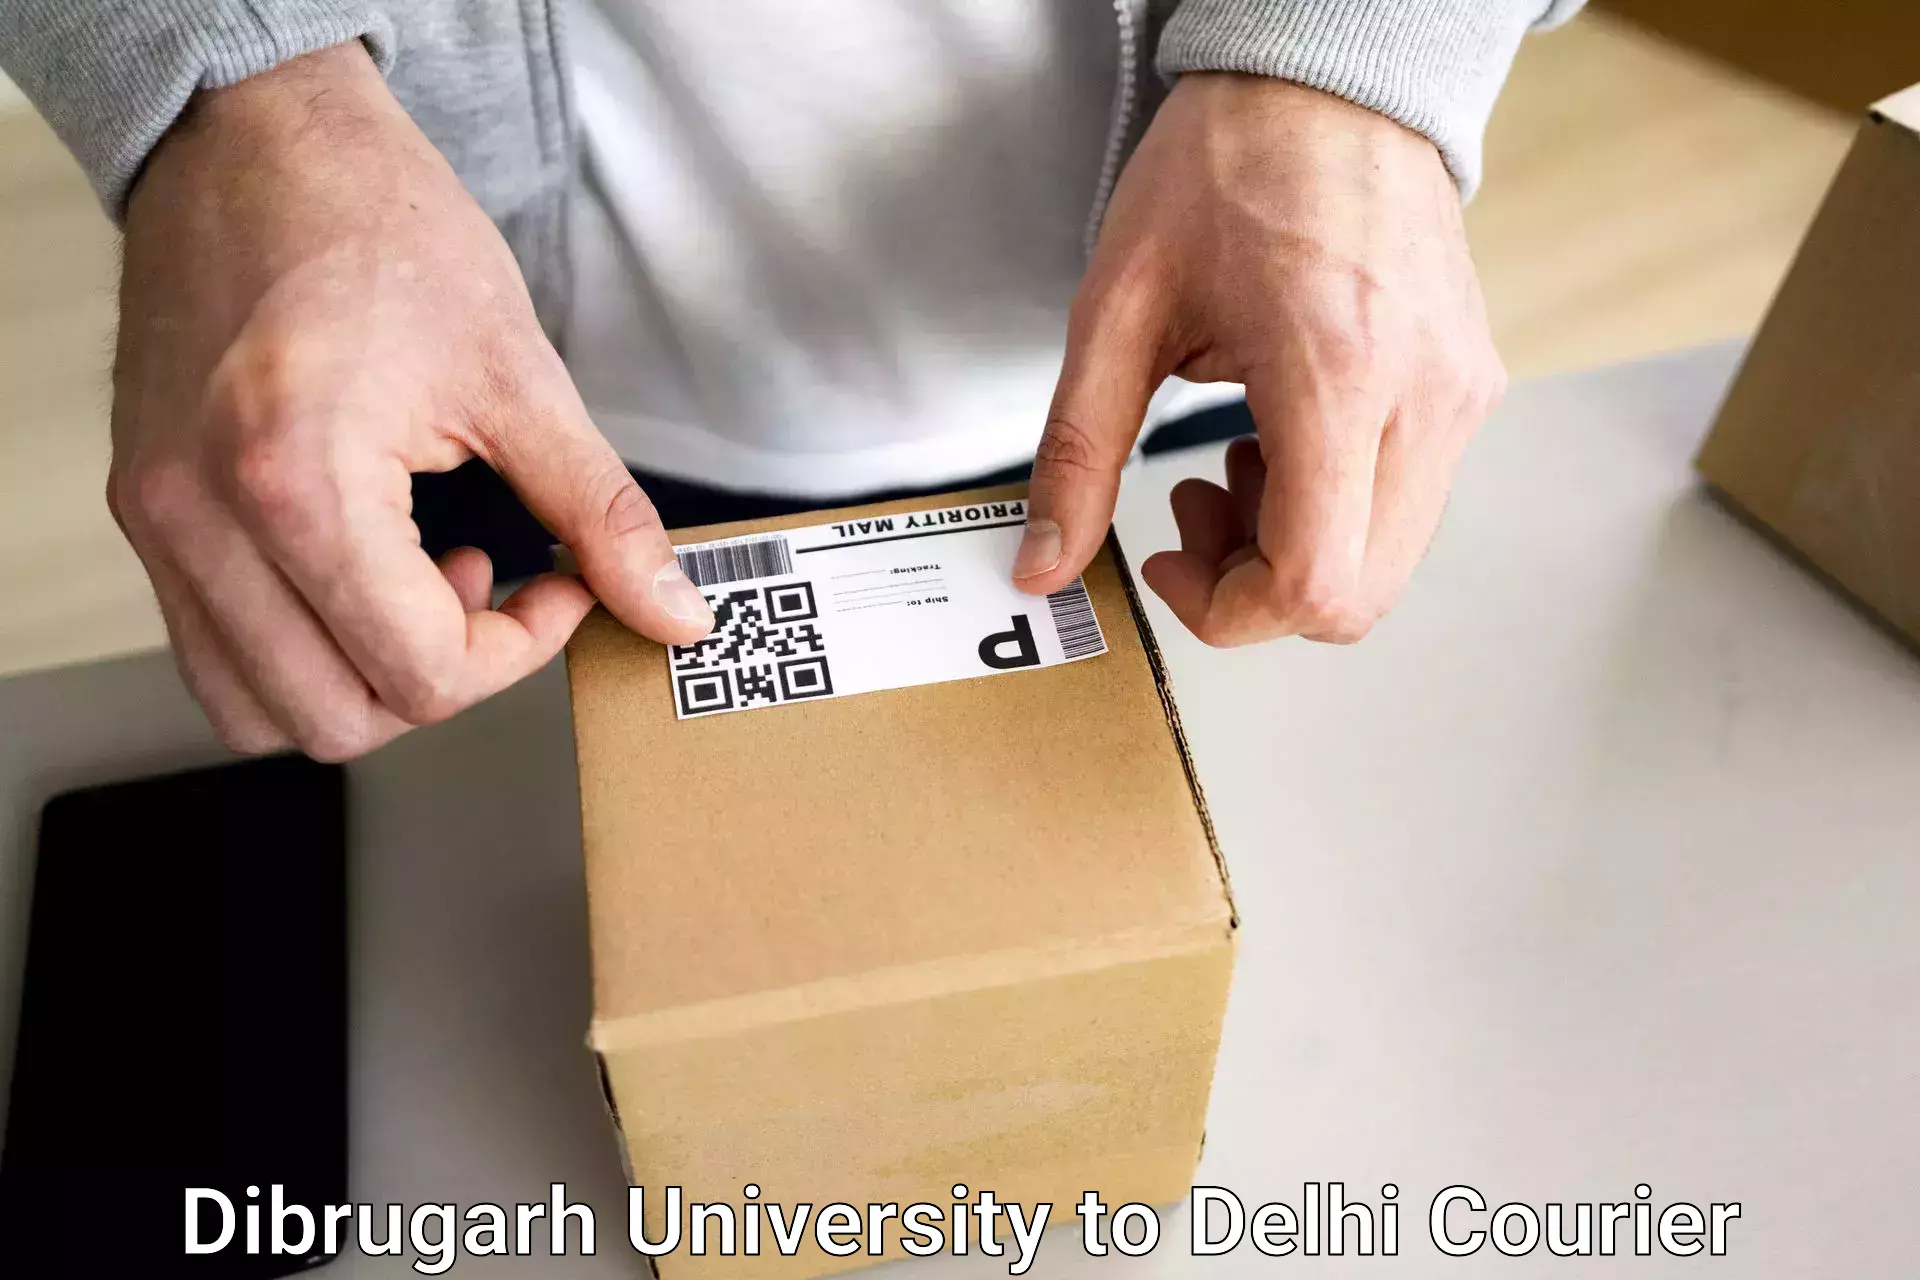 Luggage shipment tracking Dibrugarh University to University of Delhi